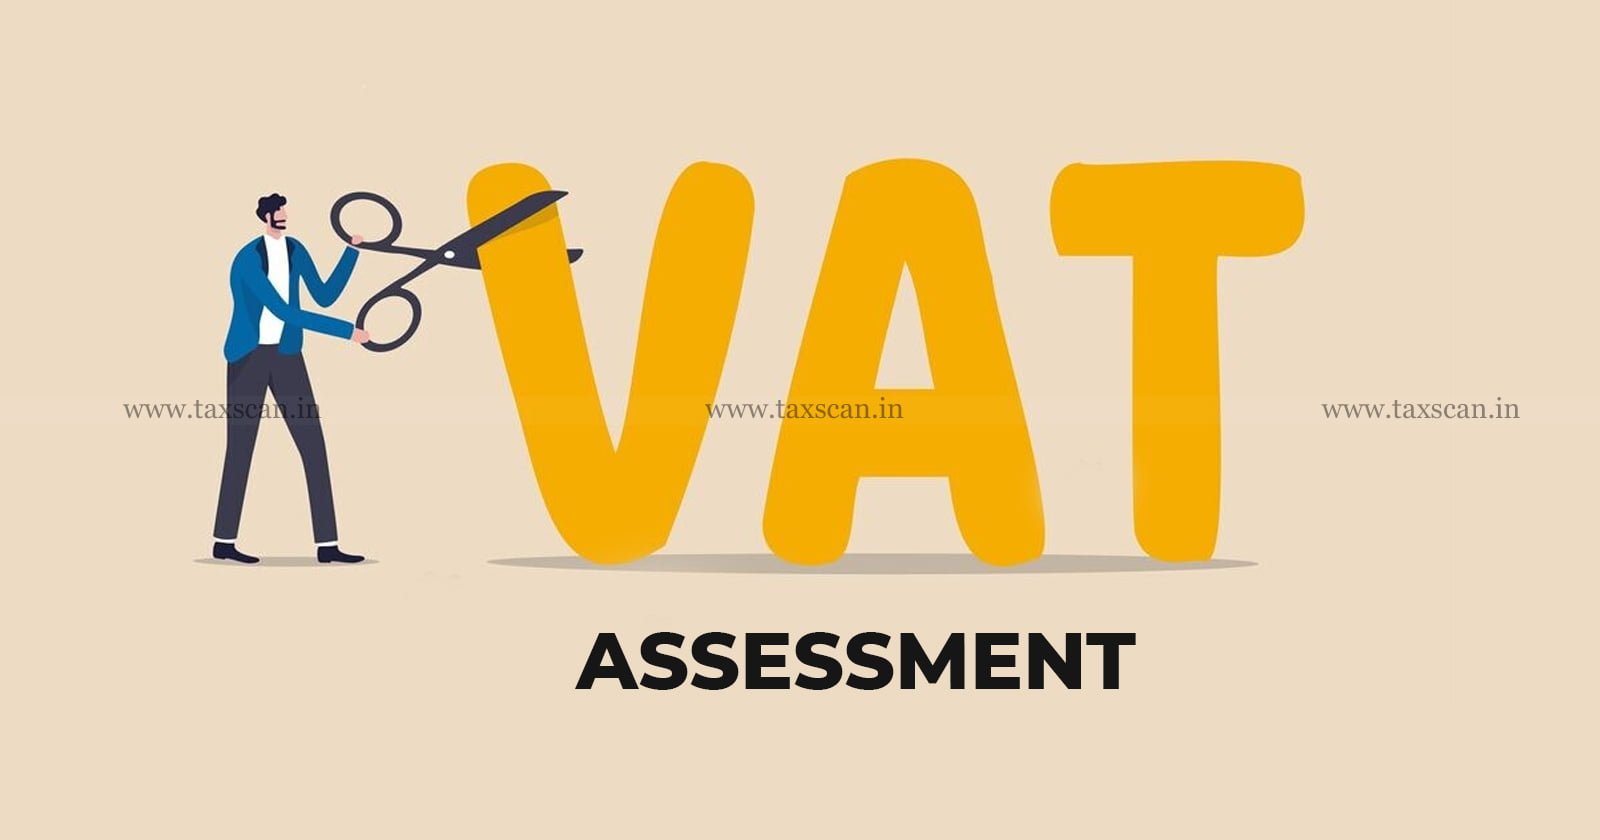 Kerala High Court Orders - Kerala High Court - expedited review - stay Petition - VAT Assessments - Halt Enforcement - VAT - Assessments - taxscan